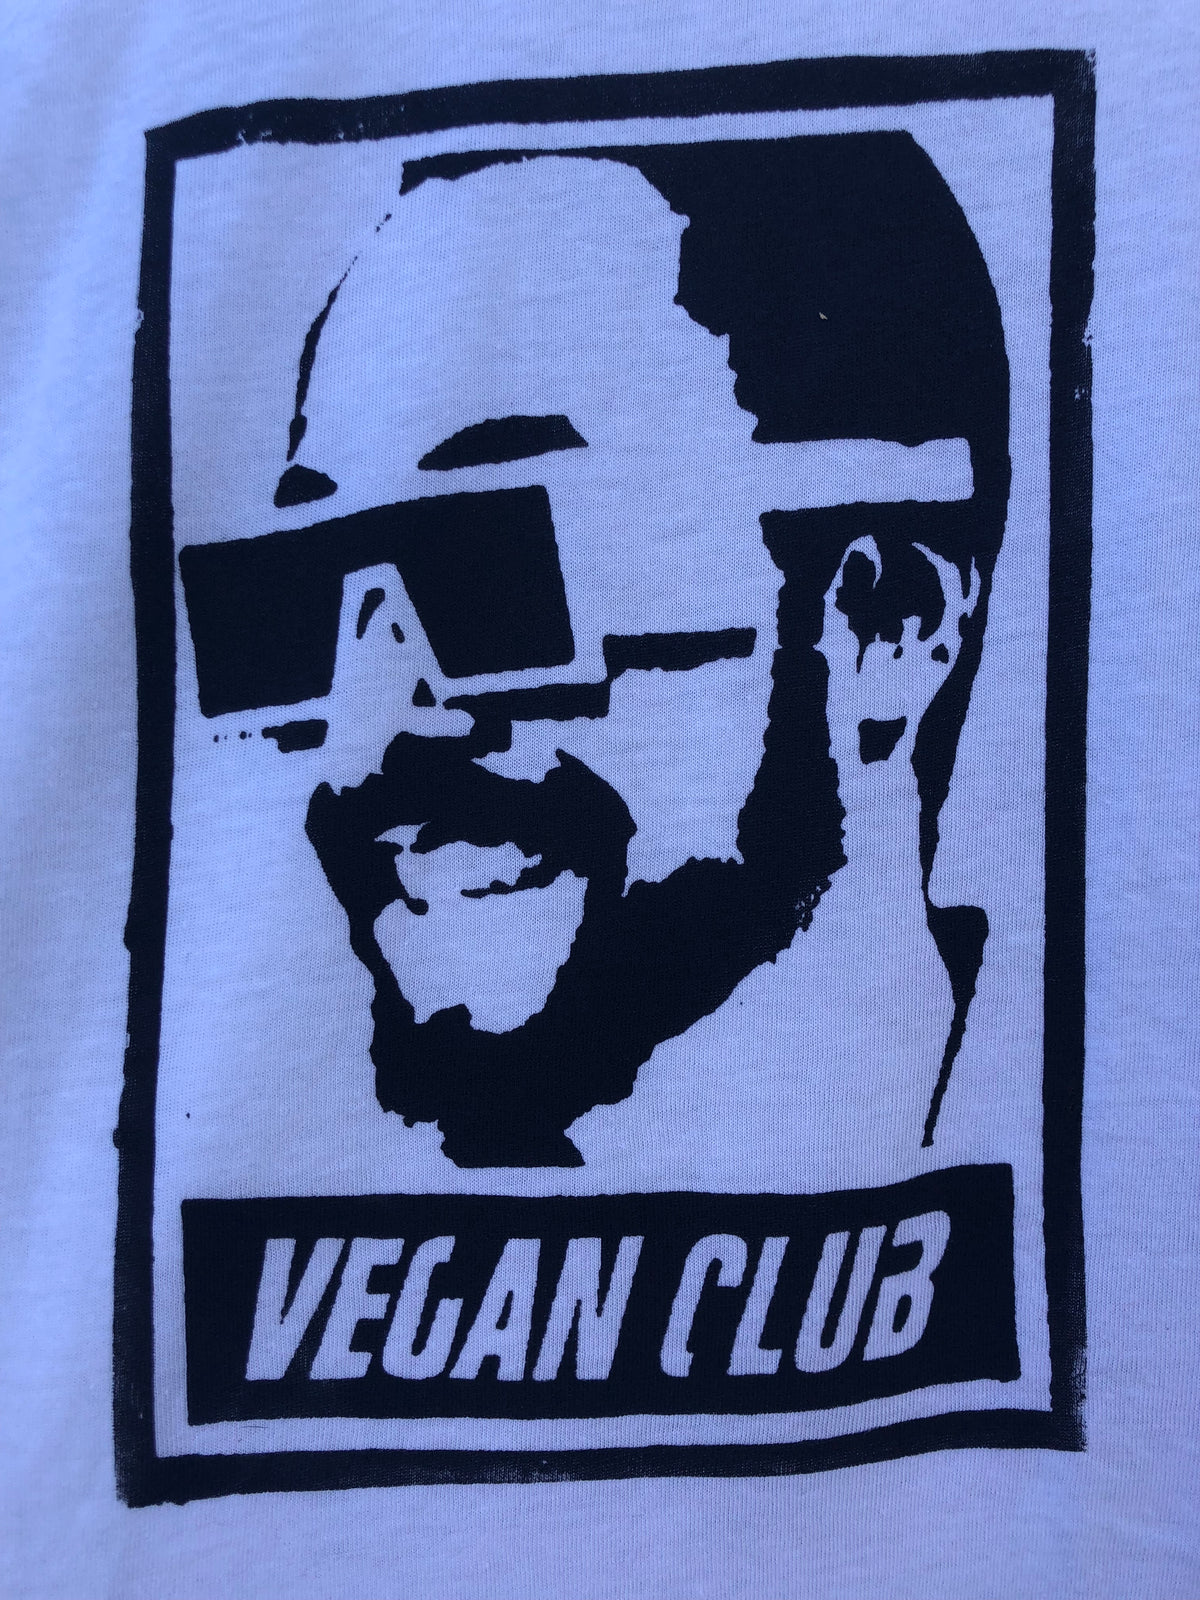 Will.I.AM Organic Made in USA T-shirt "Vegan Club"